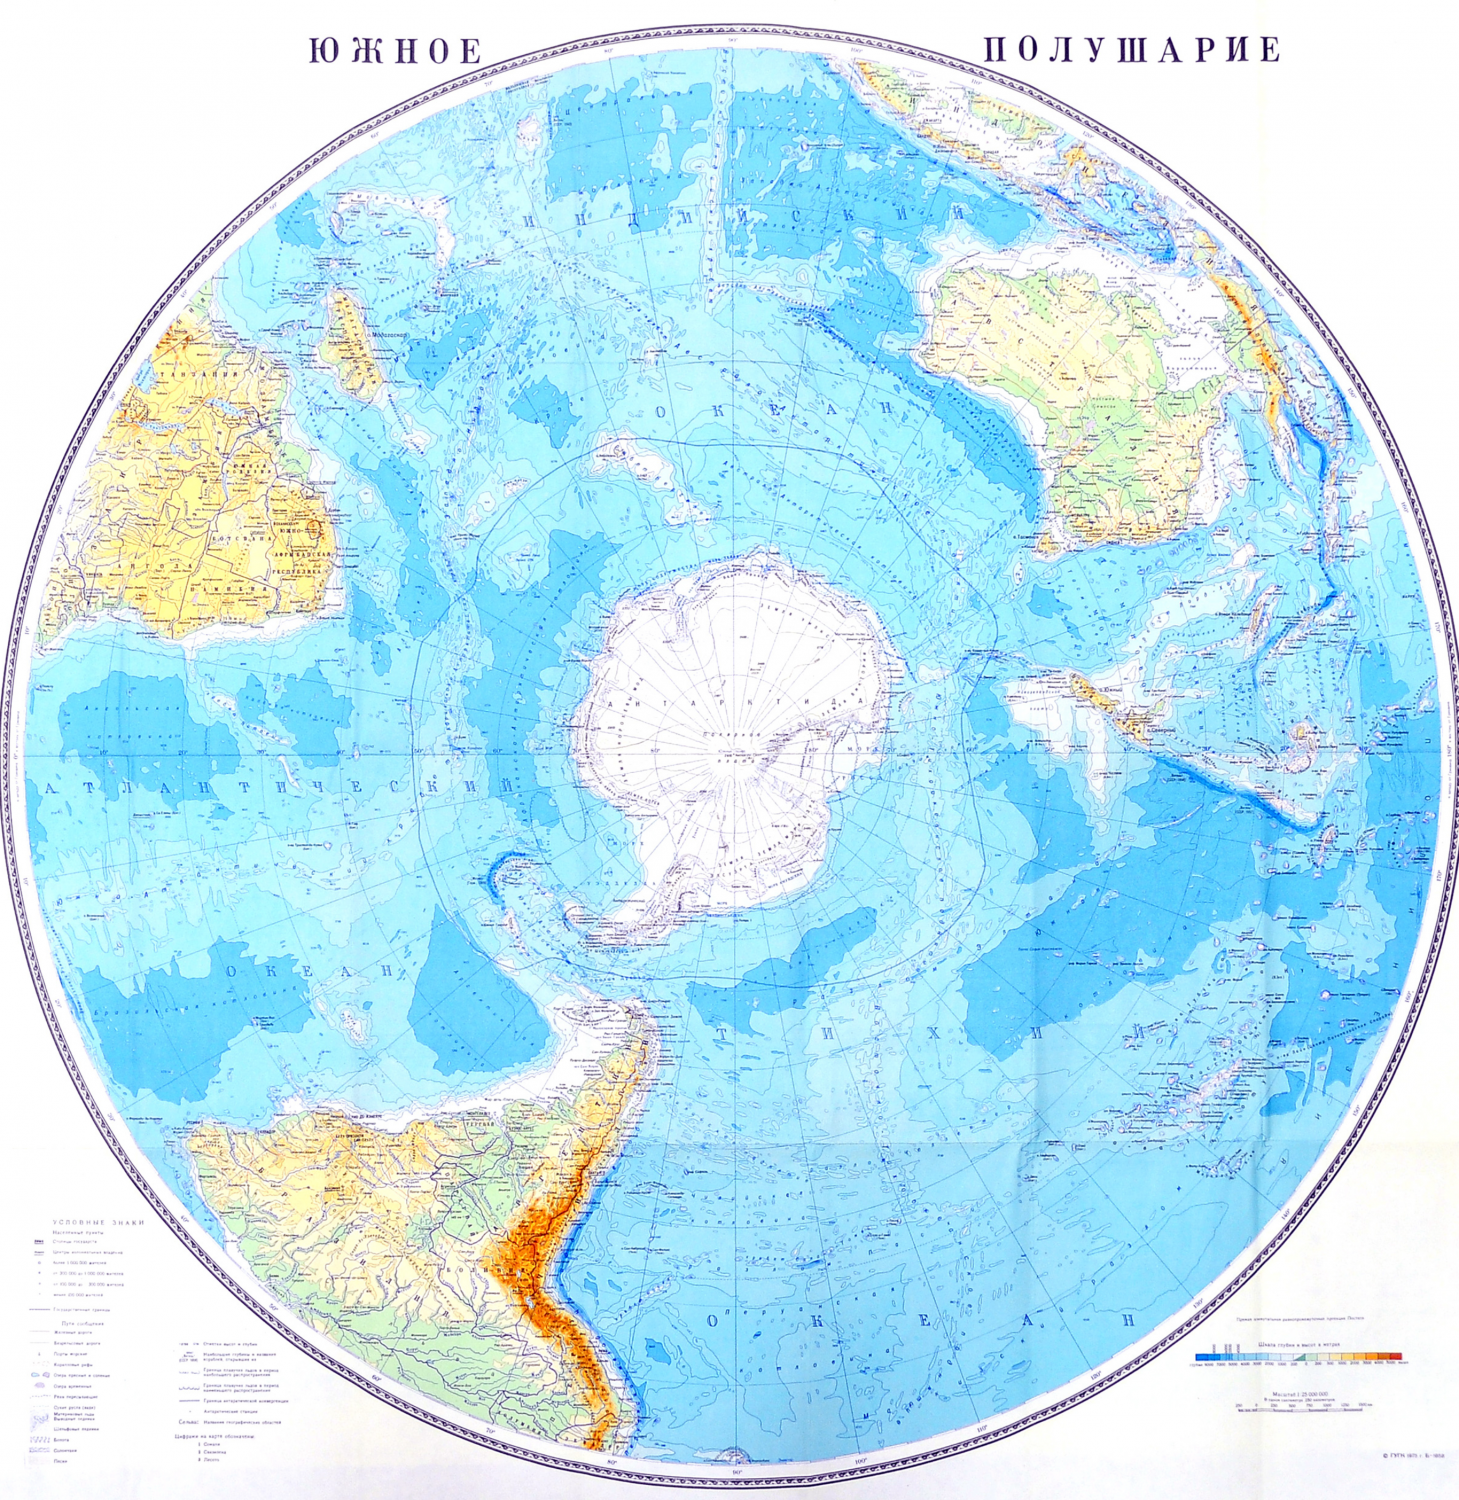 Южное полушарие на карте. Карта Южного полушария земли. Северное полушарие на карте. Полушария земли Северное и Южное. Полушария земли карта северное и южное